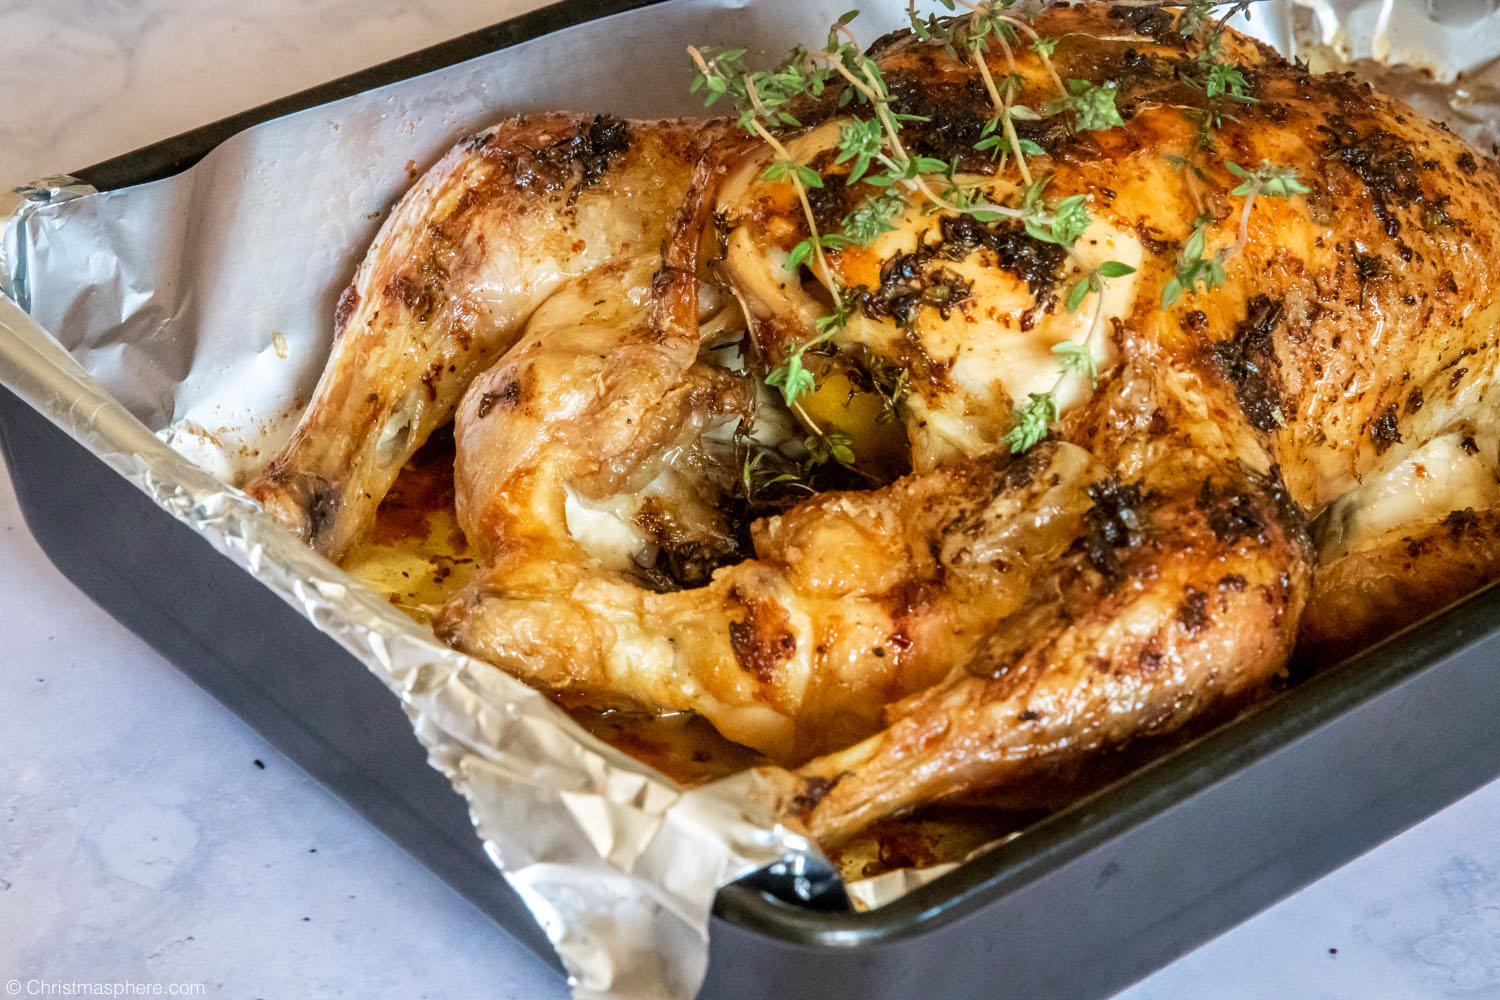 Roast Chicken Recipe